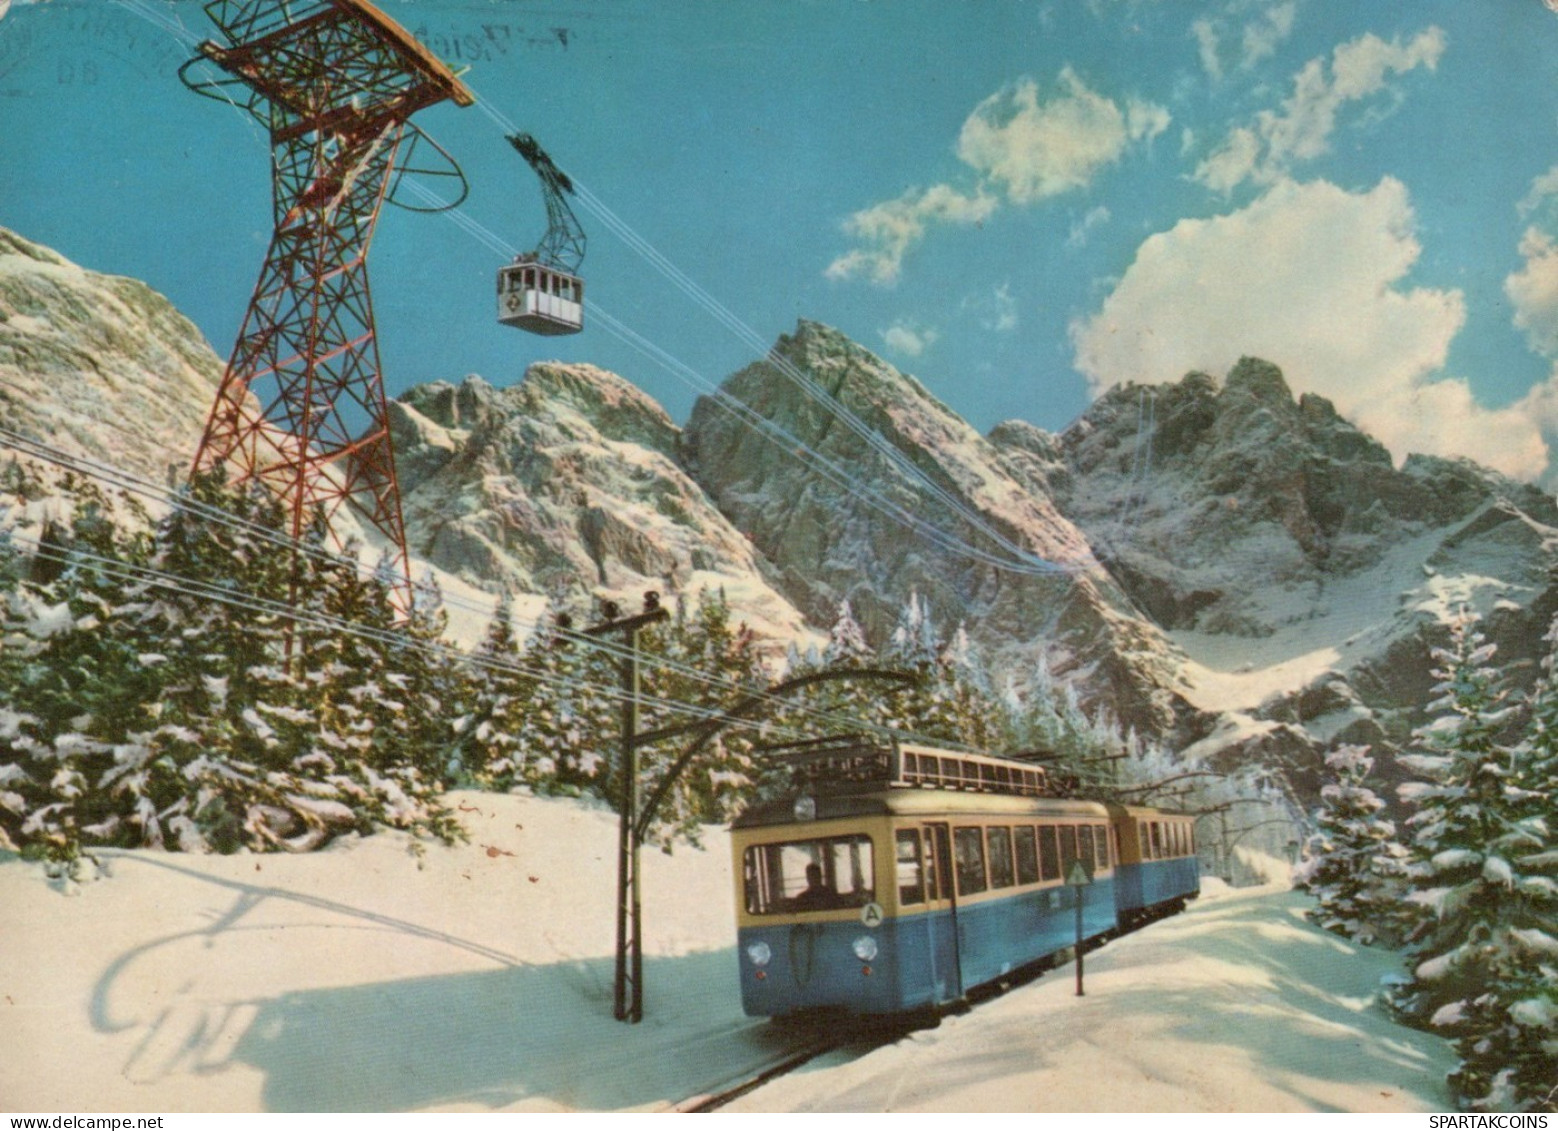 TREN TRANSPORTE Ferroviario Vintage Tarjeta Postal CPSM #PAA924.A - Trains